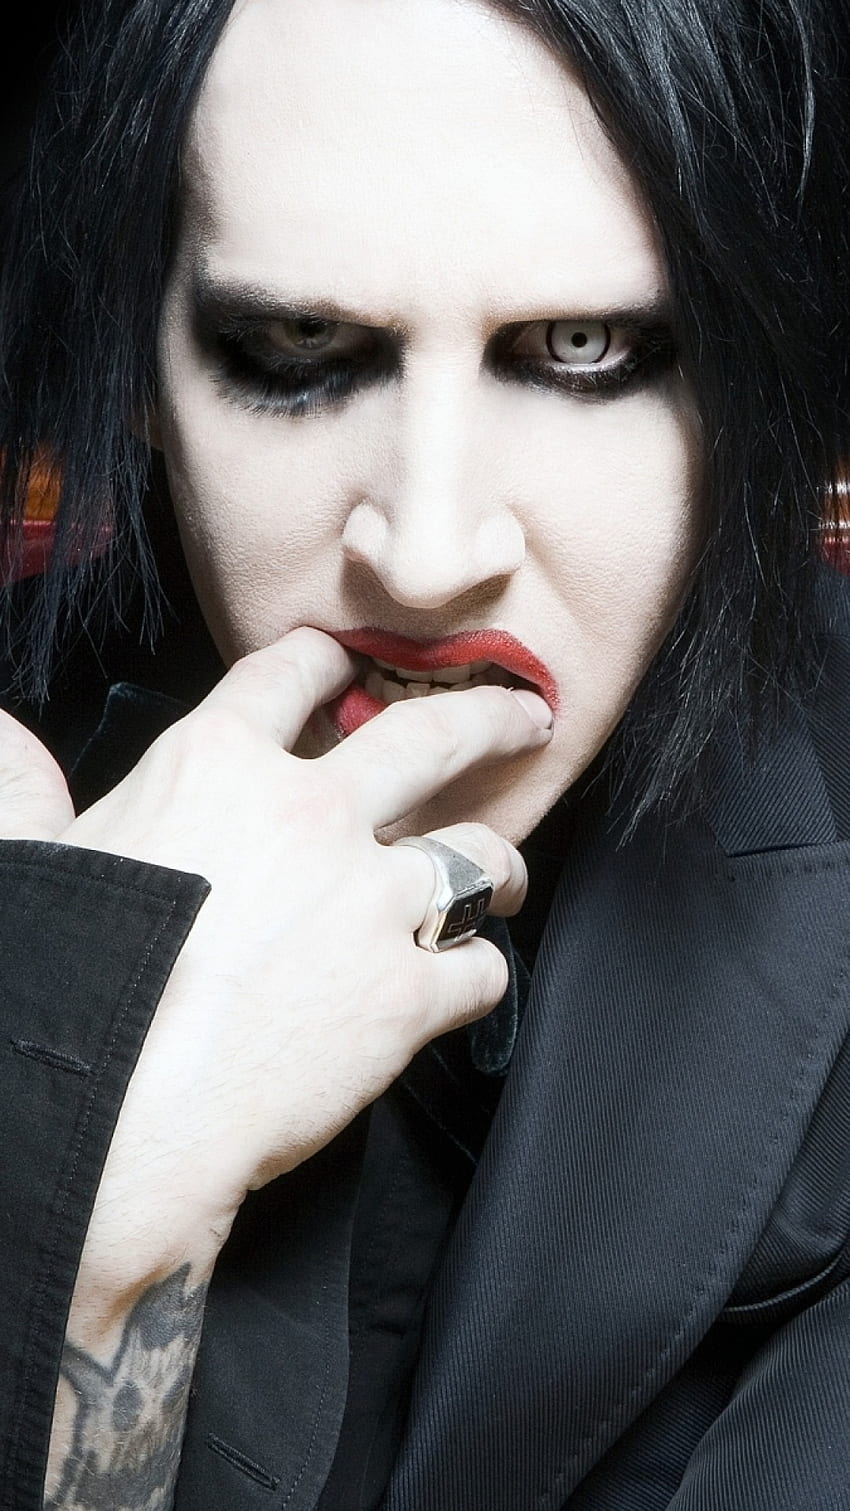 EmKilly  My Marilyn Manson tattoo by Luka Lajoie